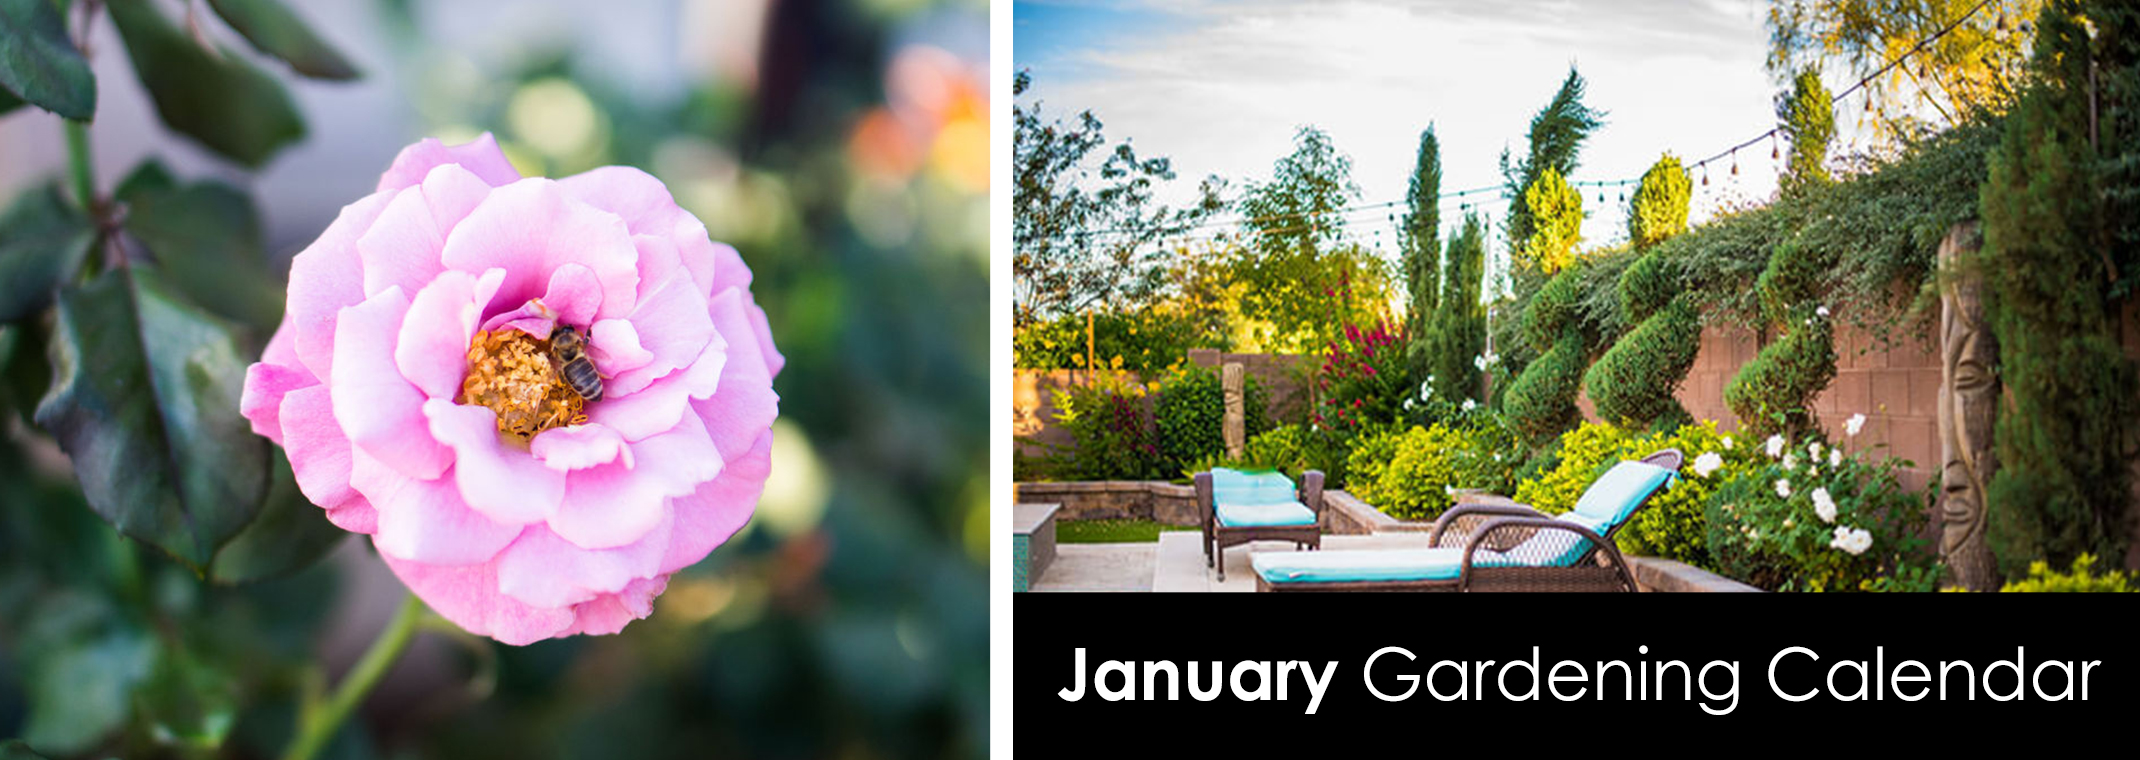 January Gardening Calendar banner